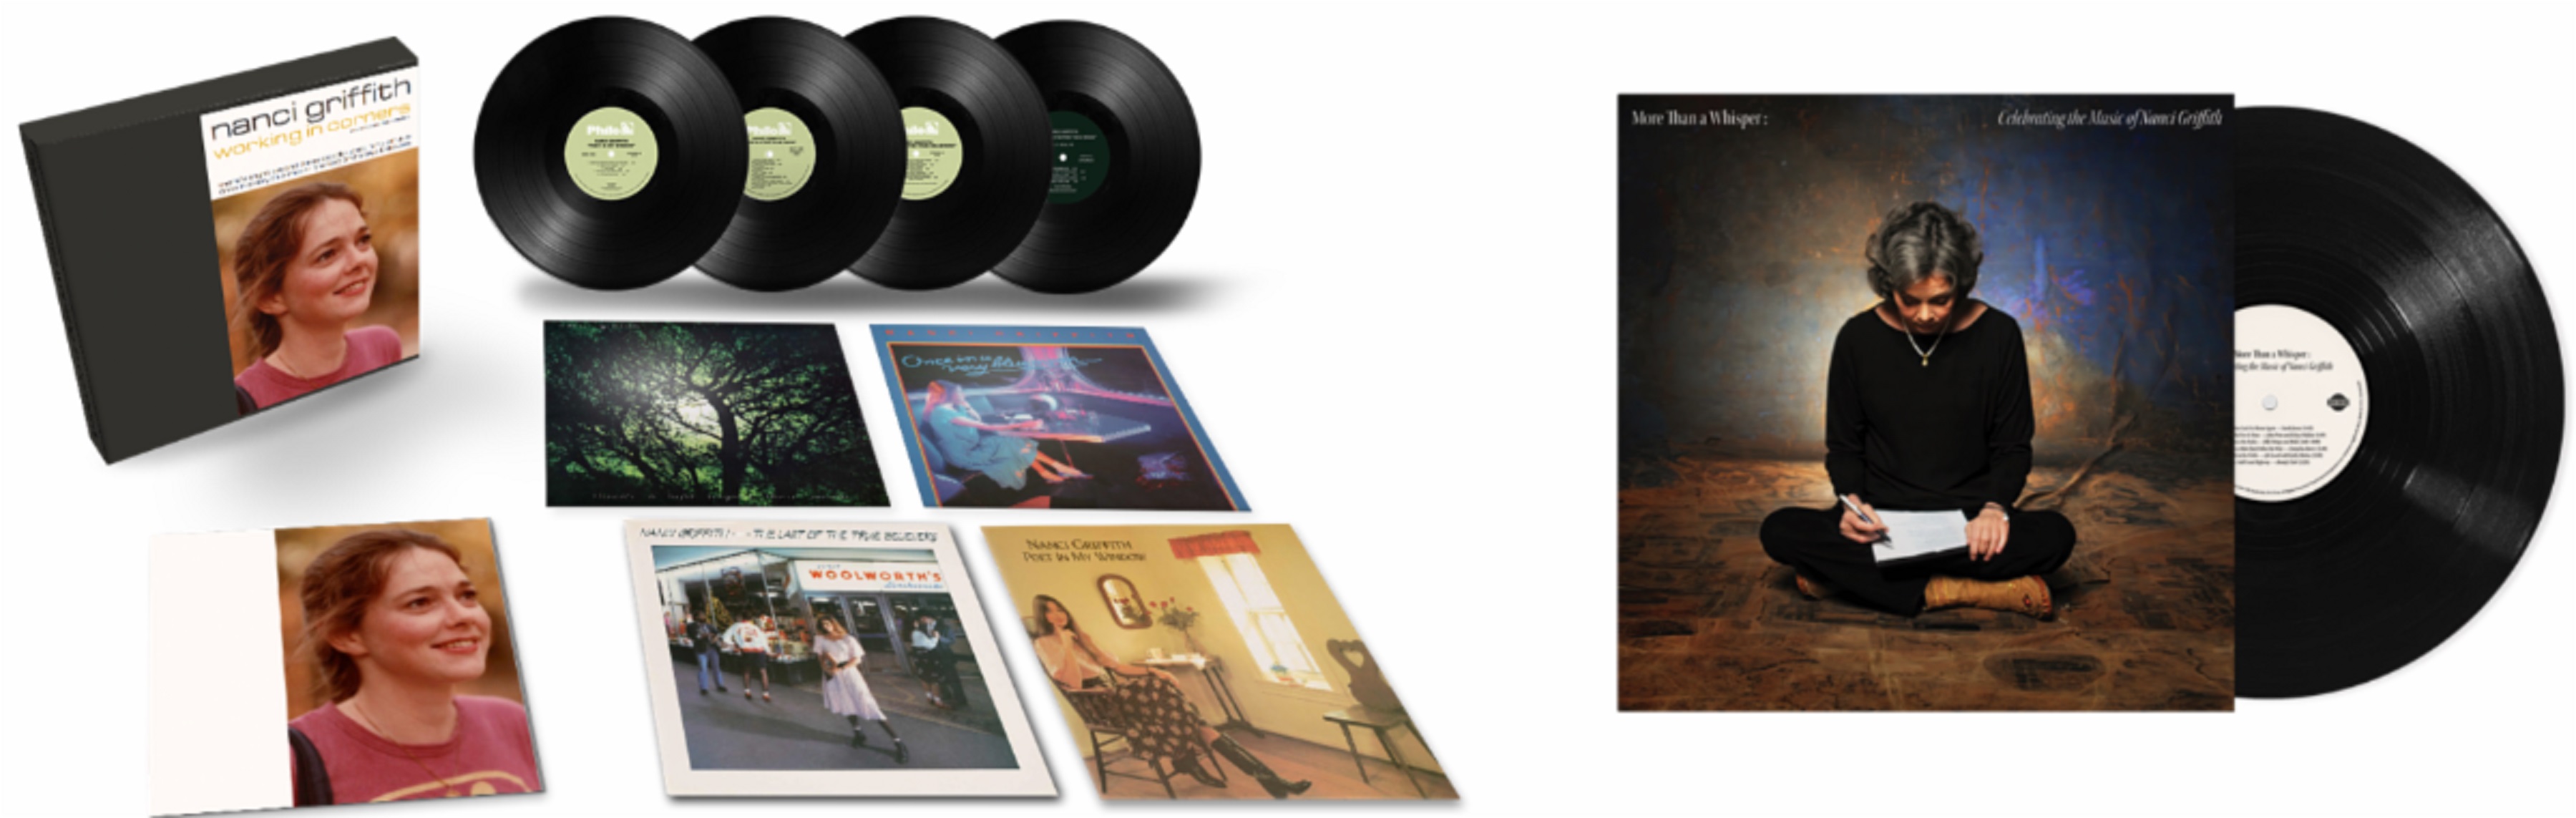 R.E.M.'s Divisive 2004 LP 'Around the Sun' Get Vinyl Reissue Treatment  (ALBUM REVIEW) - Glide Magazine